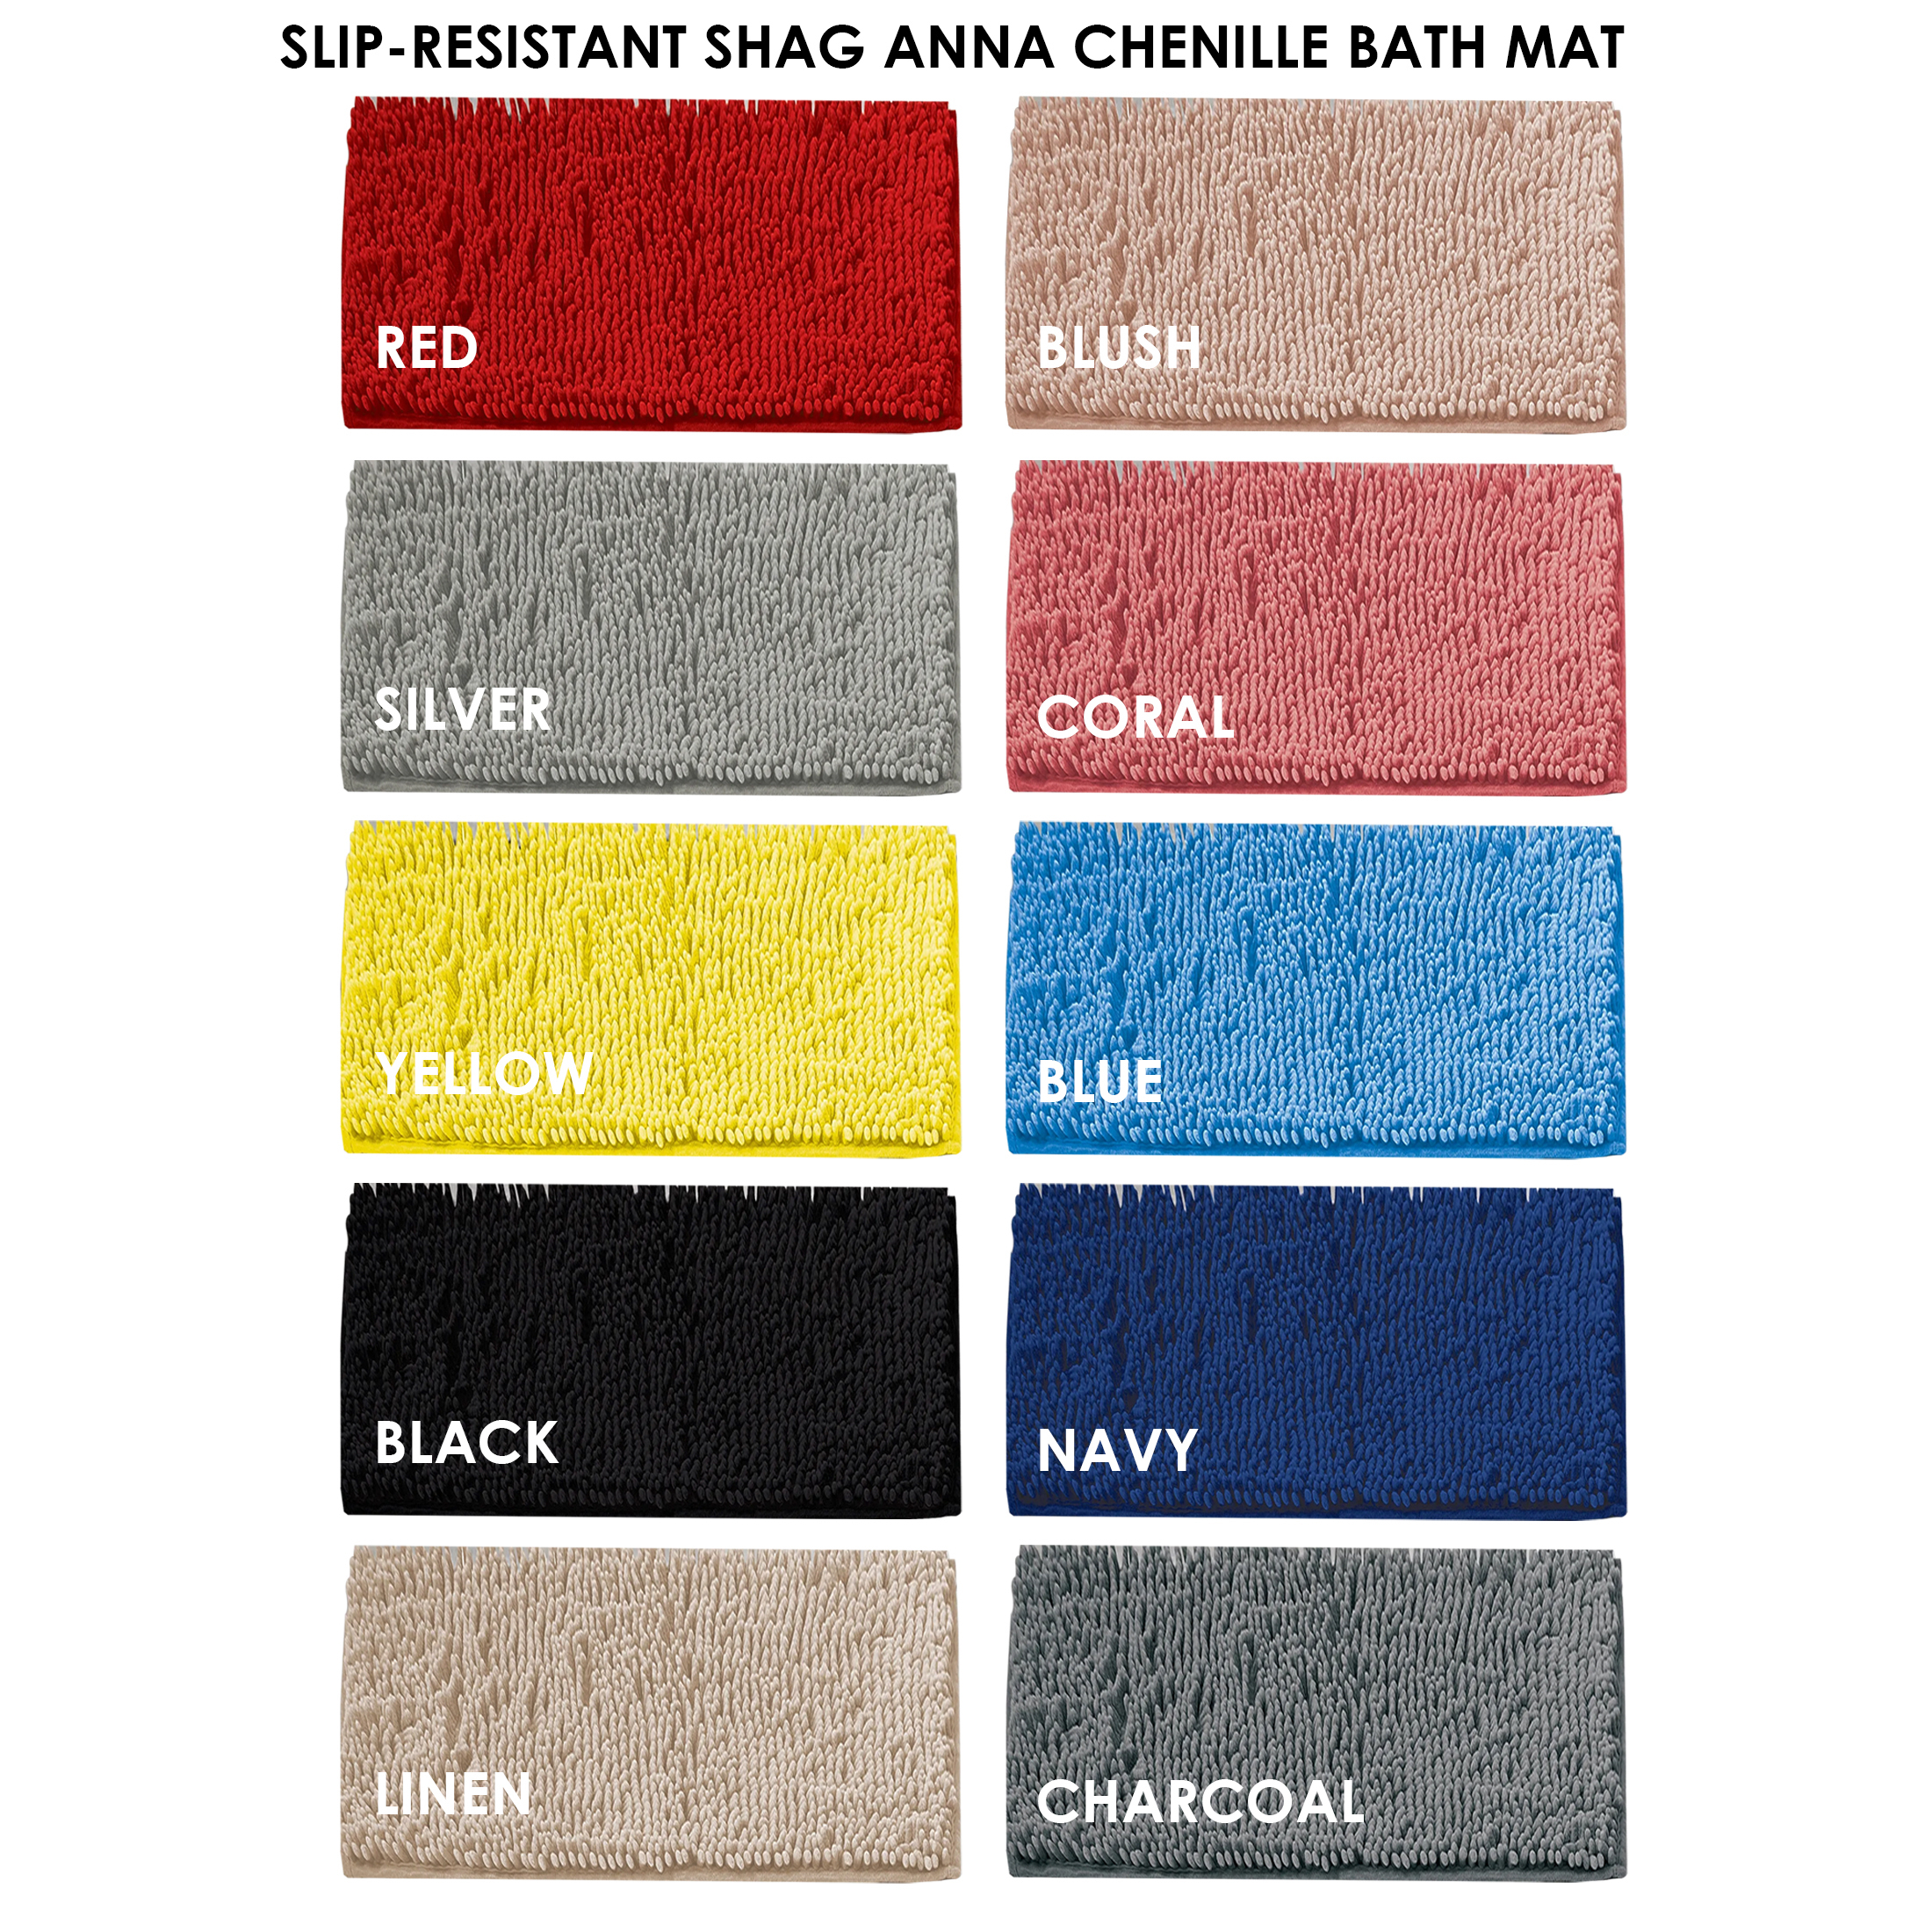 Slip-Resistant Shag Anna Chenille Soft Absorbent Bath Mat Bathroom Rug 17 X 24 - Blush